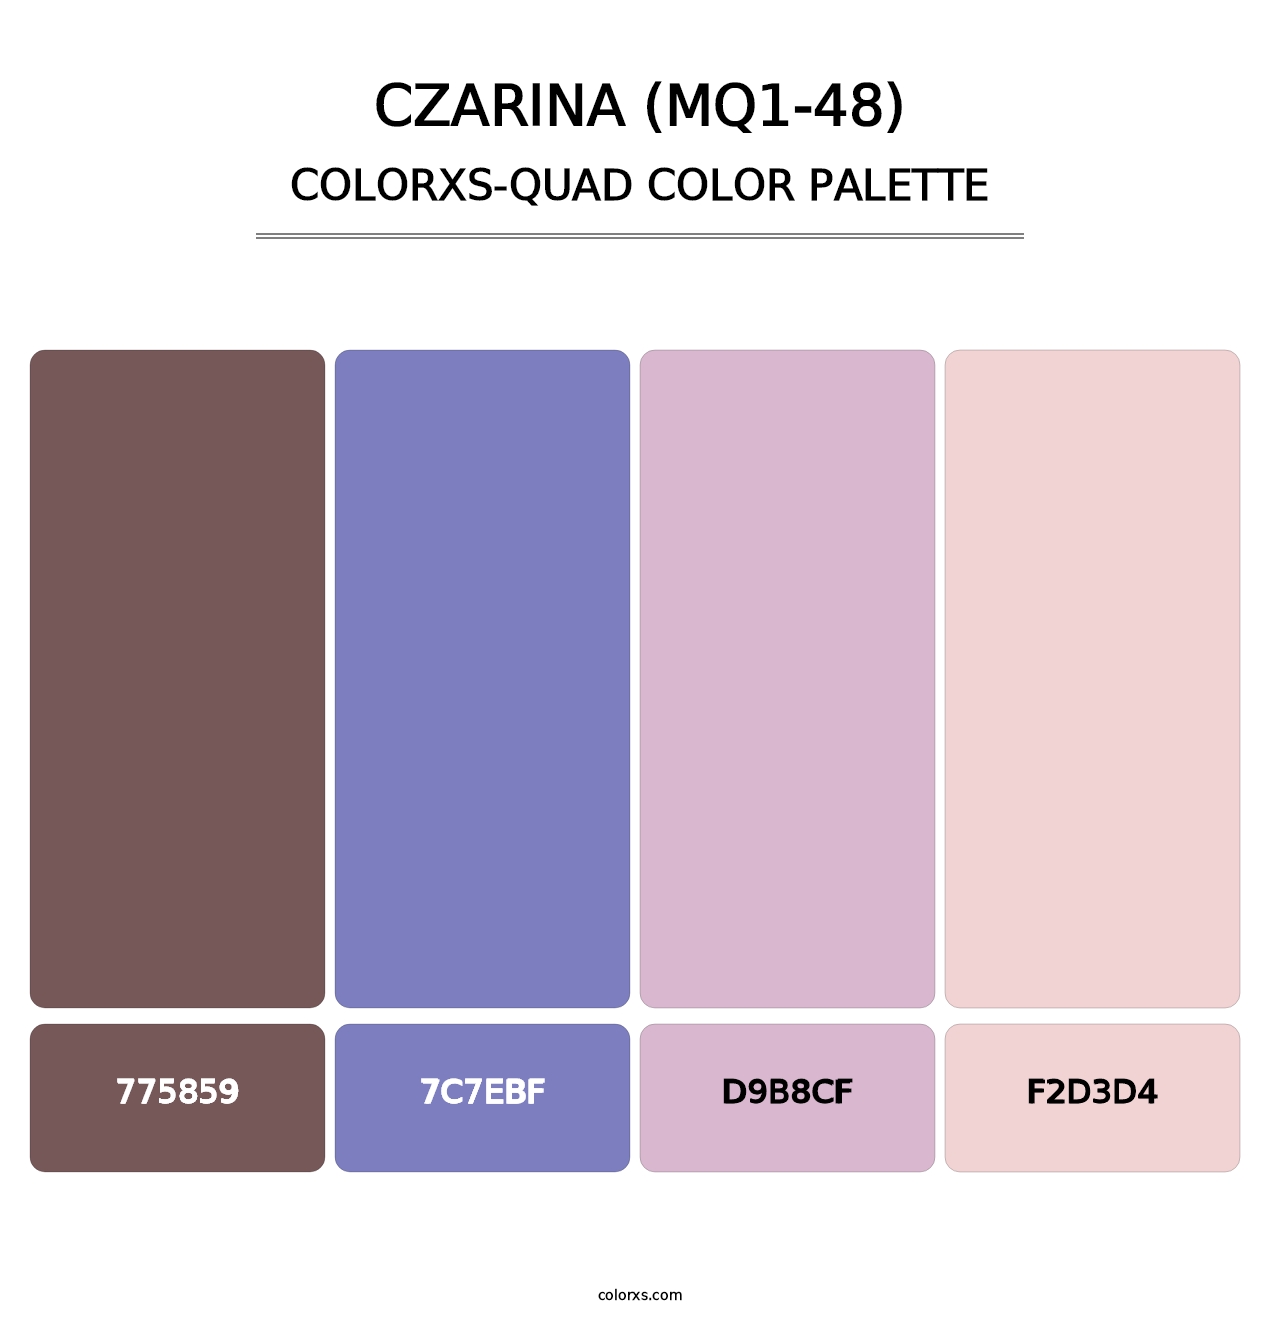 Czarina (MQ1-48) - Colorxs Quad Palette